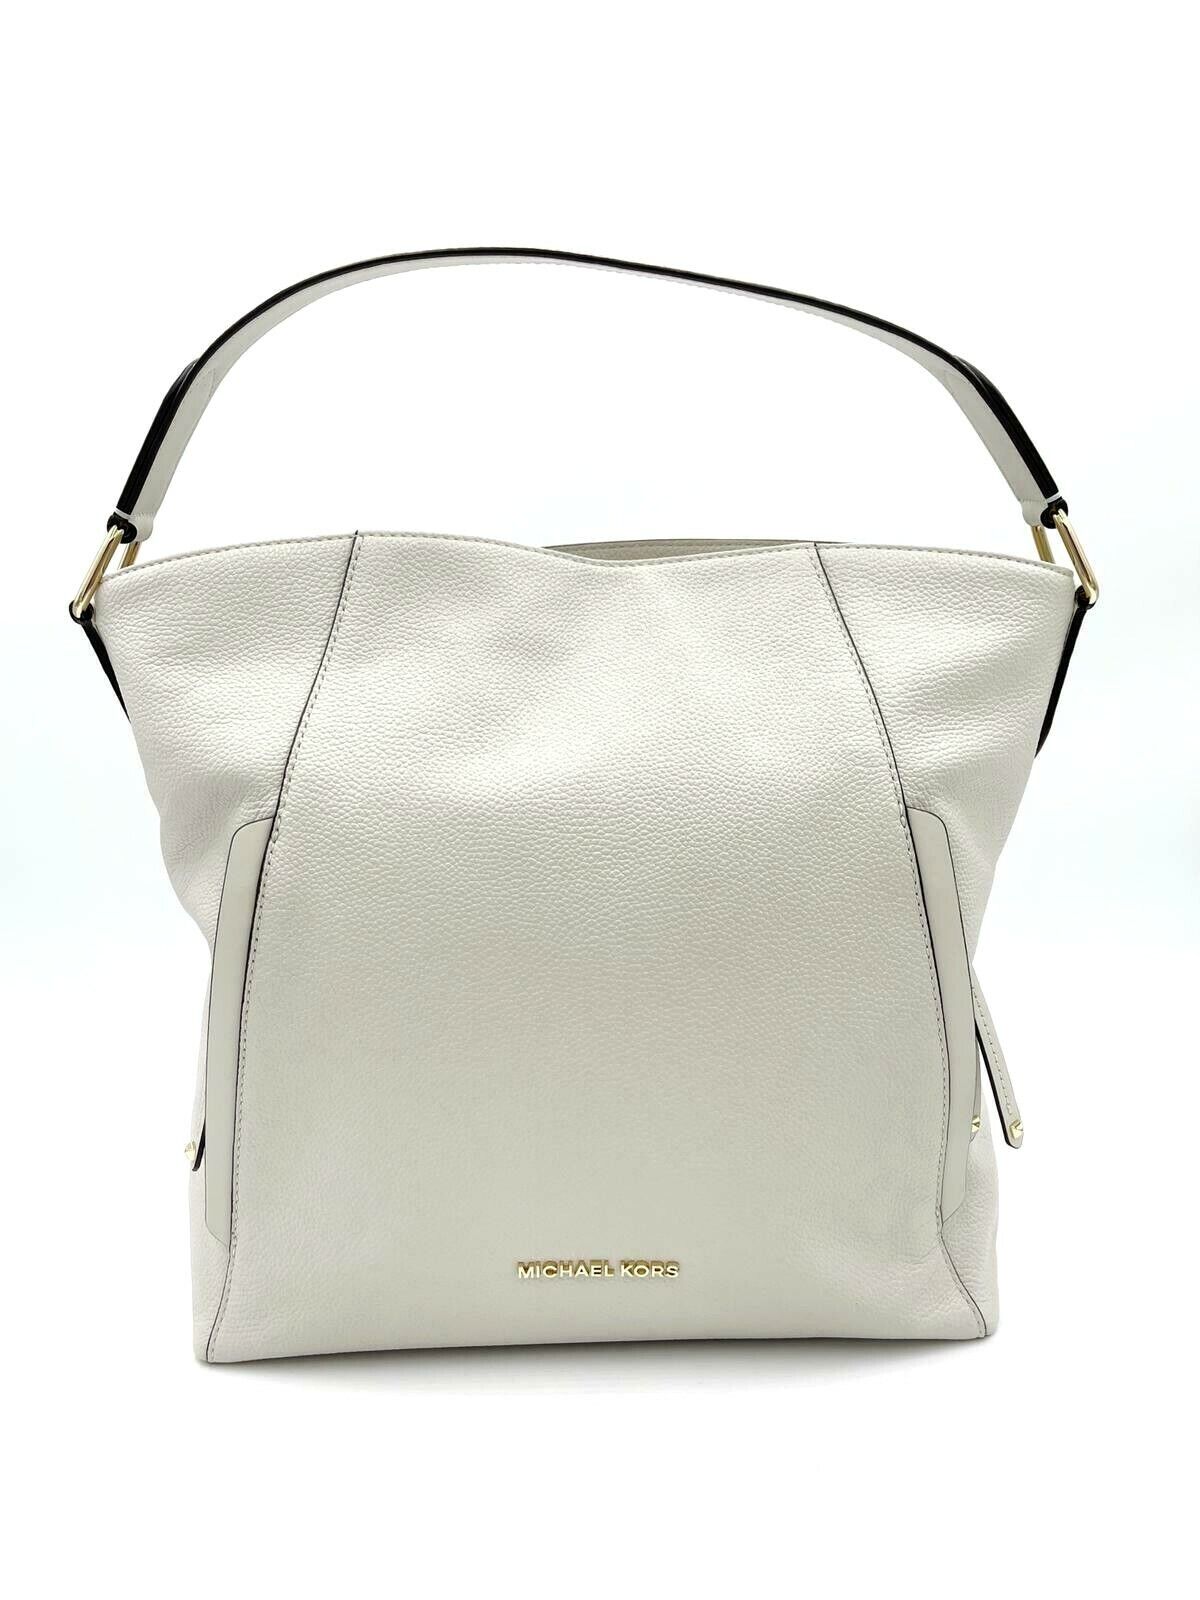 Michael Kors Evie Large Vanilla Hobo Shoulder Handbag